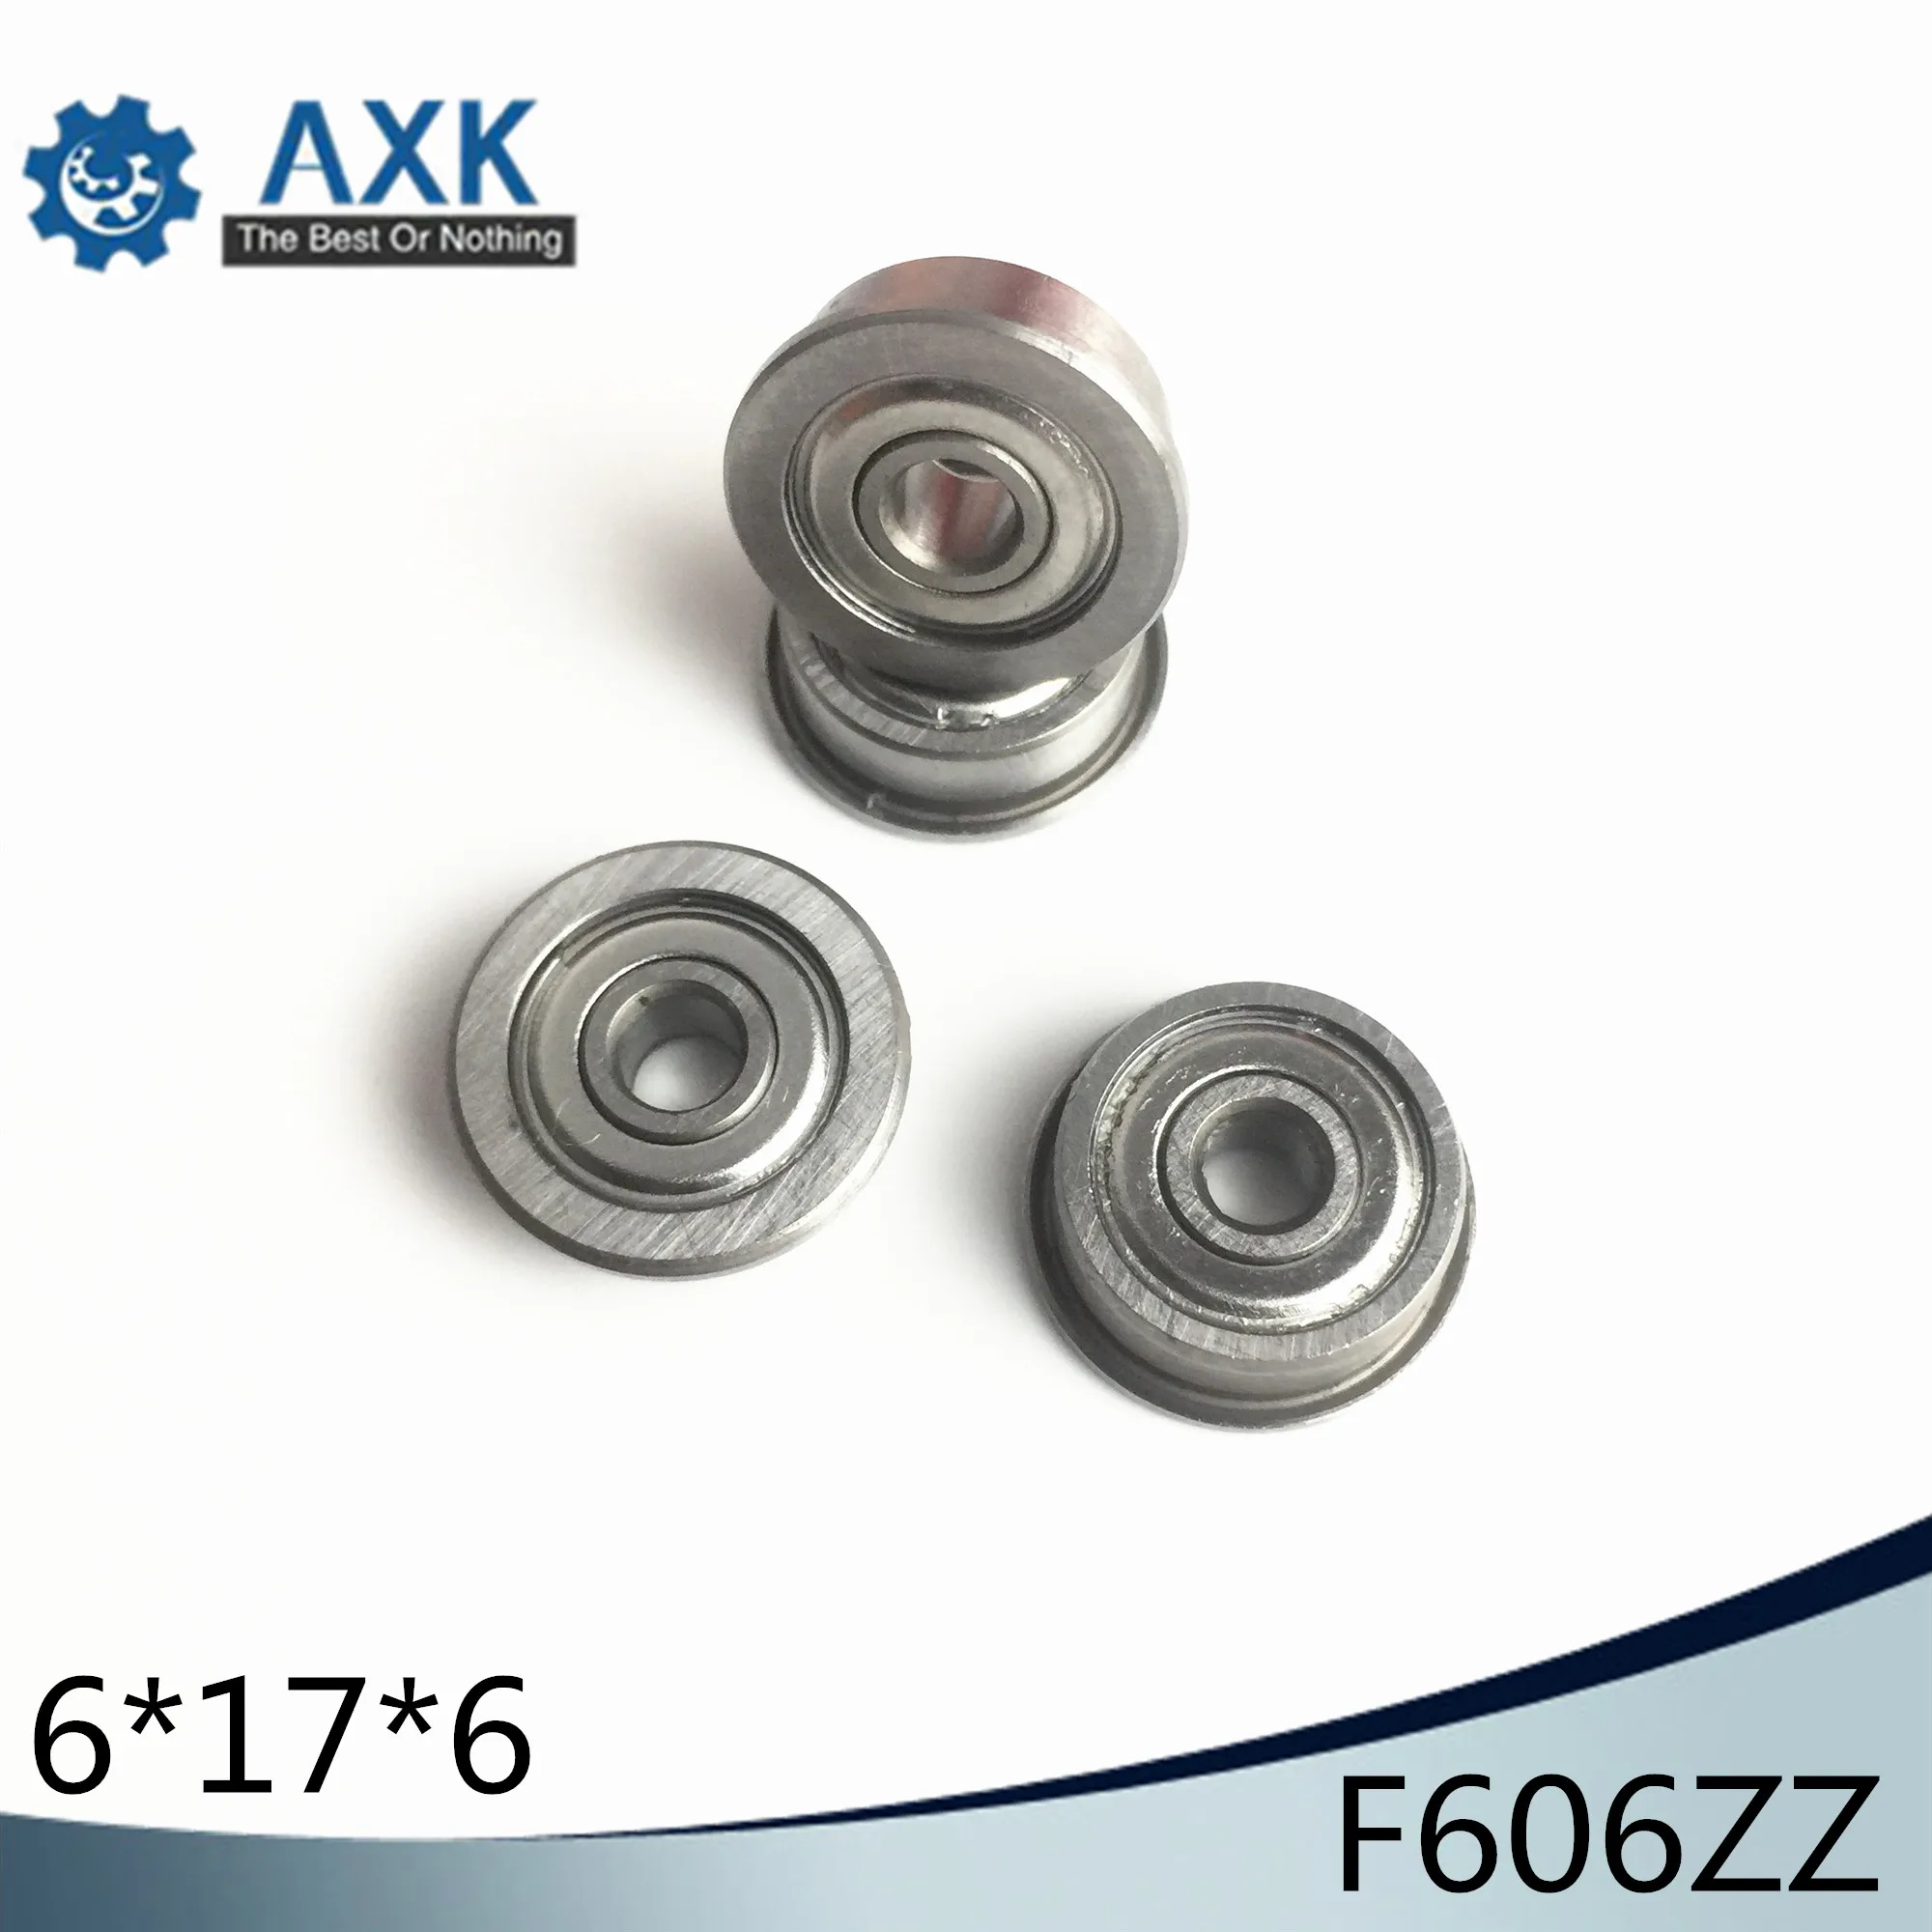 F606ZZ Flange Bearing 6x17x6 mm ABEC-1 ( 10 PCS ) Flanged F606 Z ZZ Ball Bearings